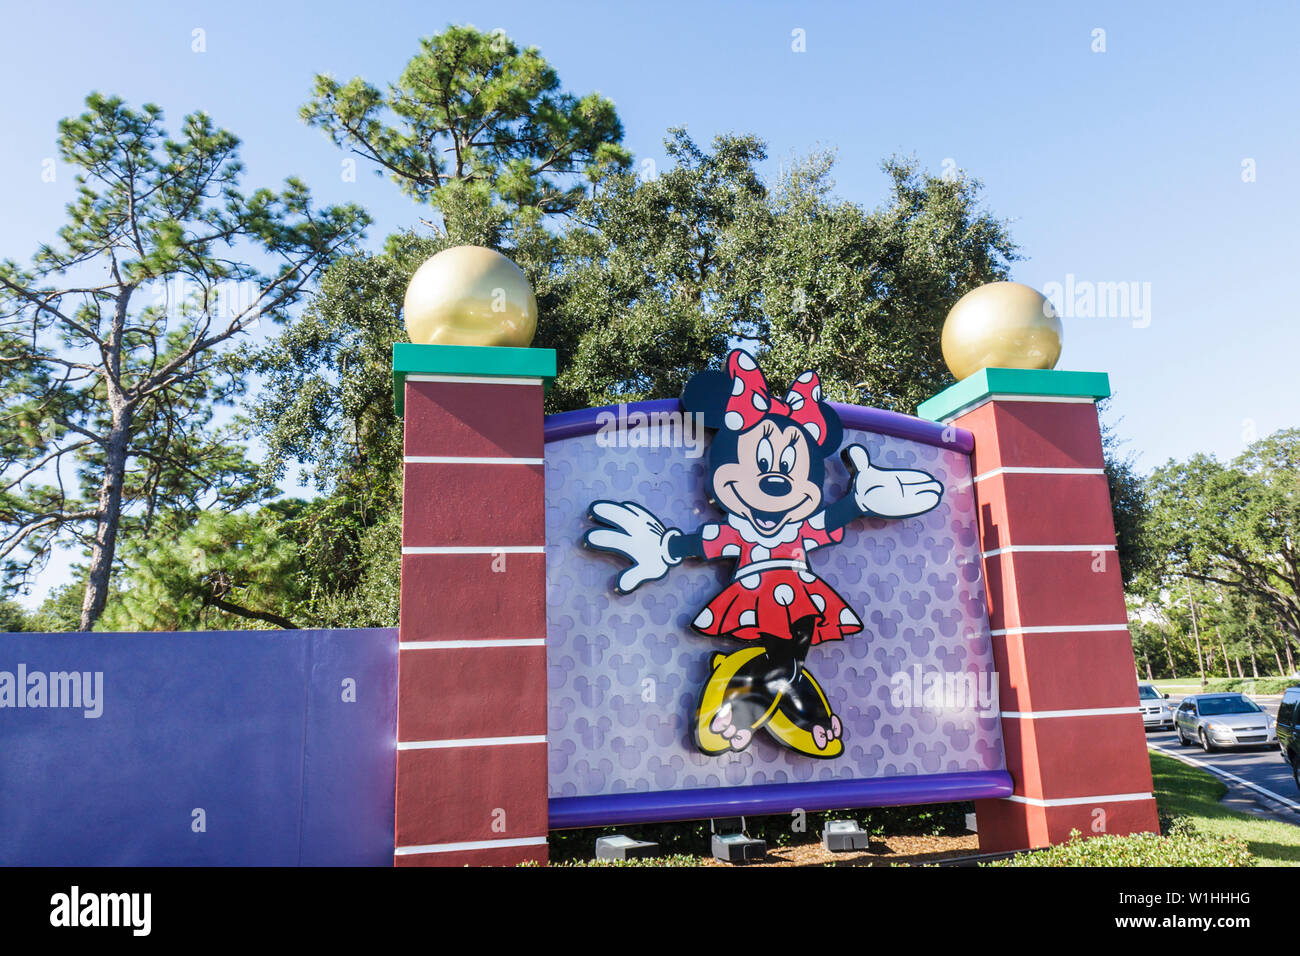 Orlando Florida,Buena Vista,Walt Disney World Resort,ingresso,fronte,cartello,logo,Minnie mouse,personaggio cartoon,parco a tema,intrattenimento,pois polka,visita Foto Stock